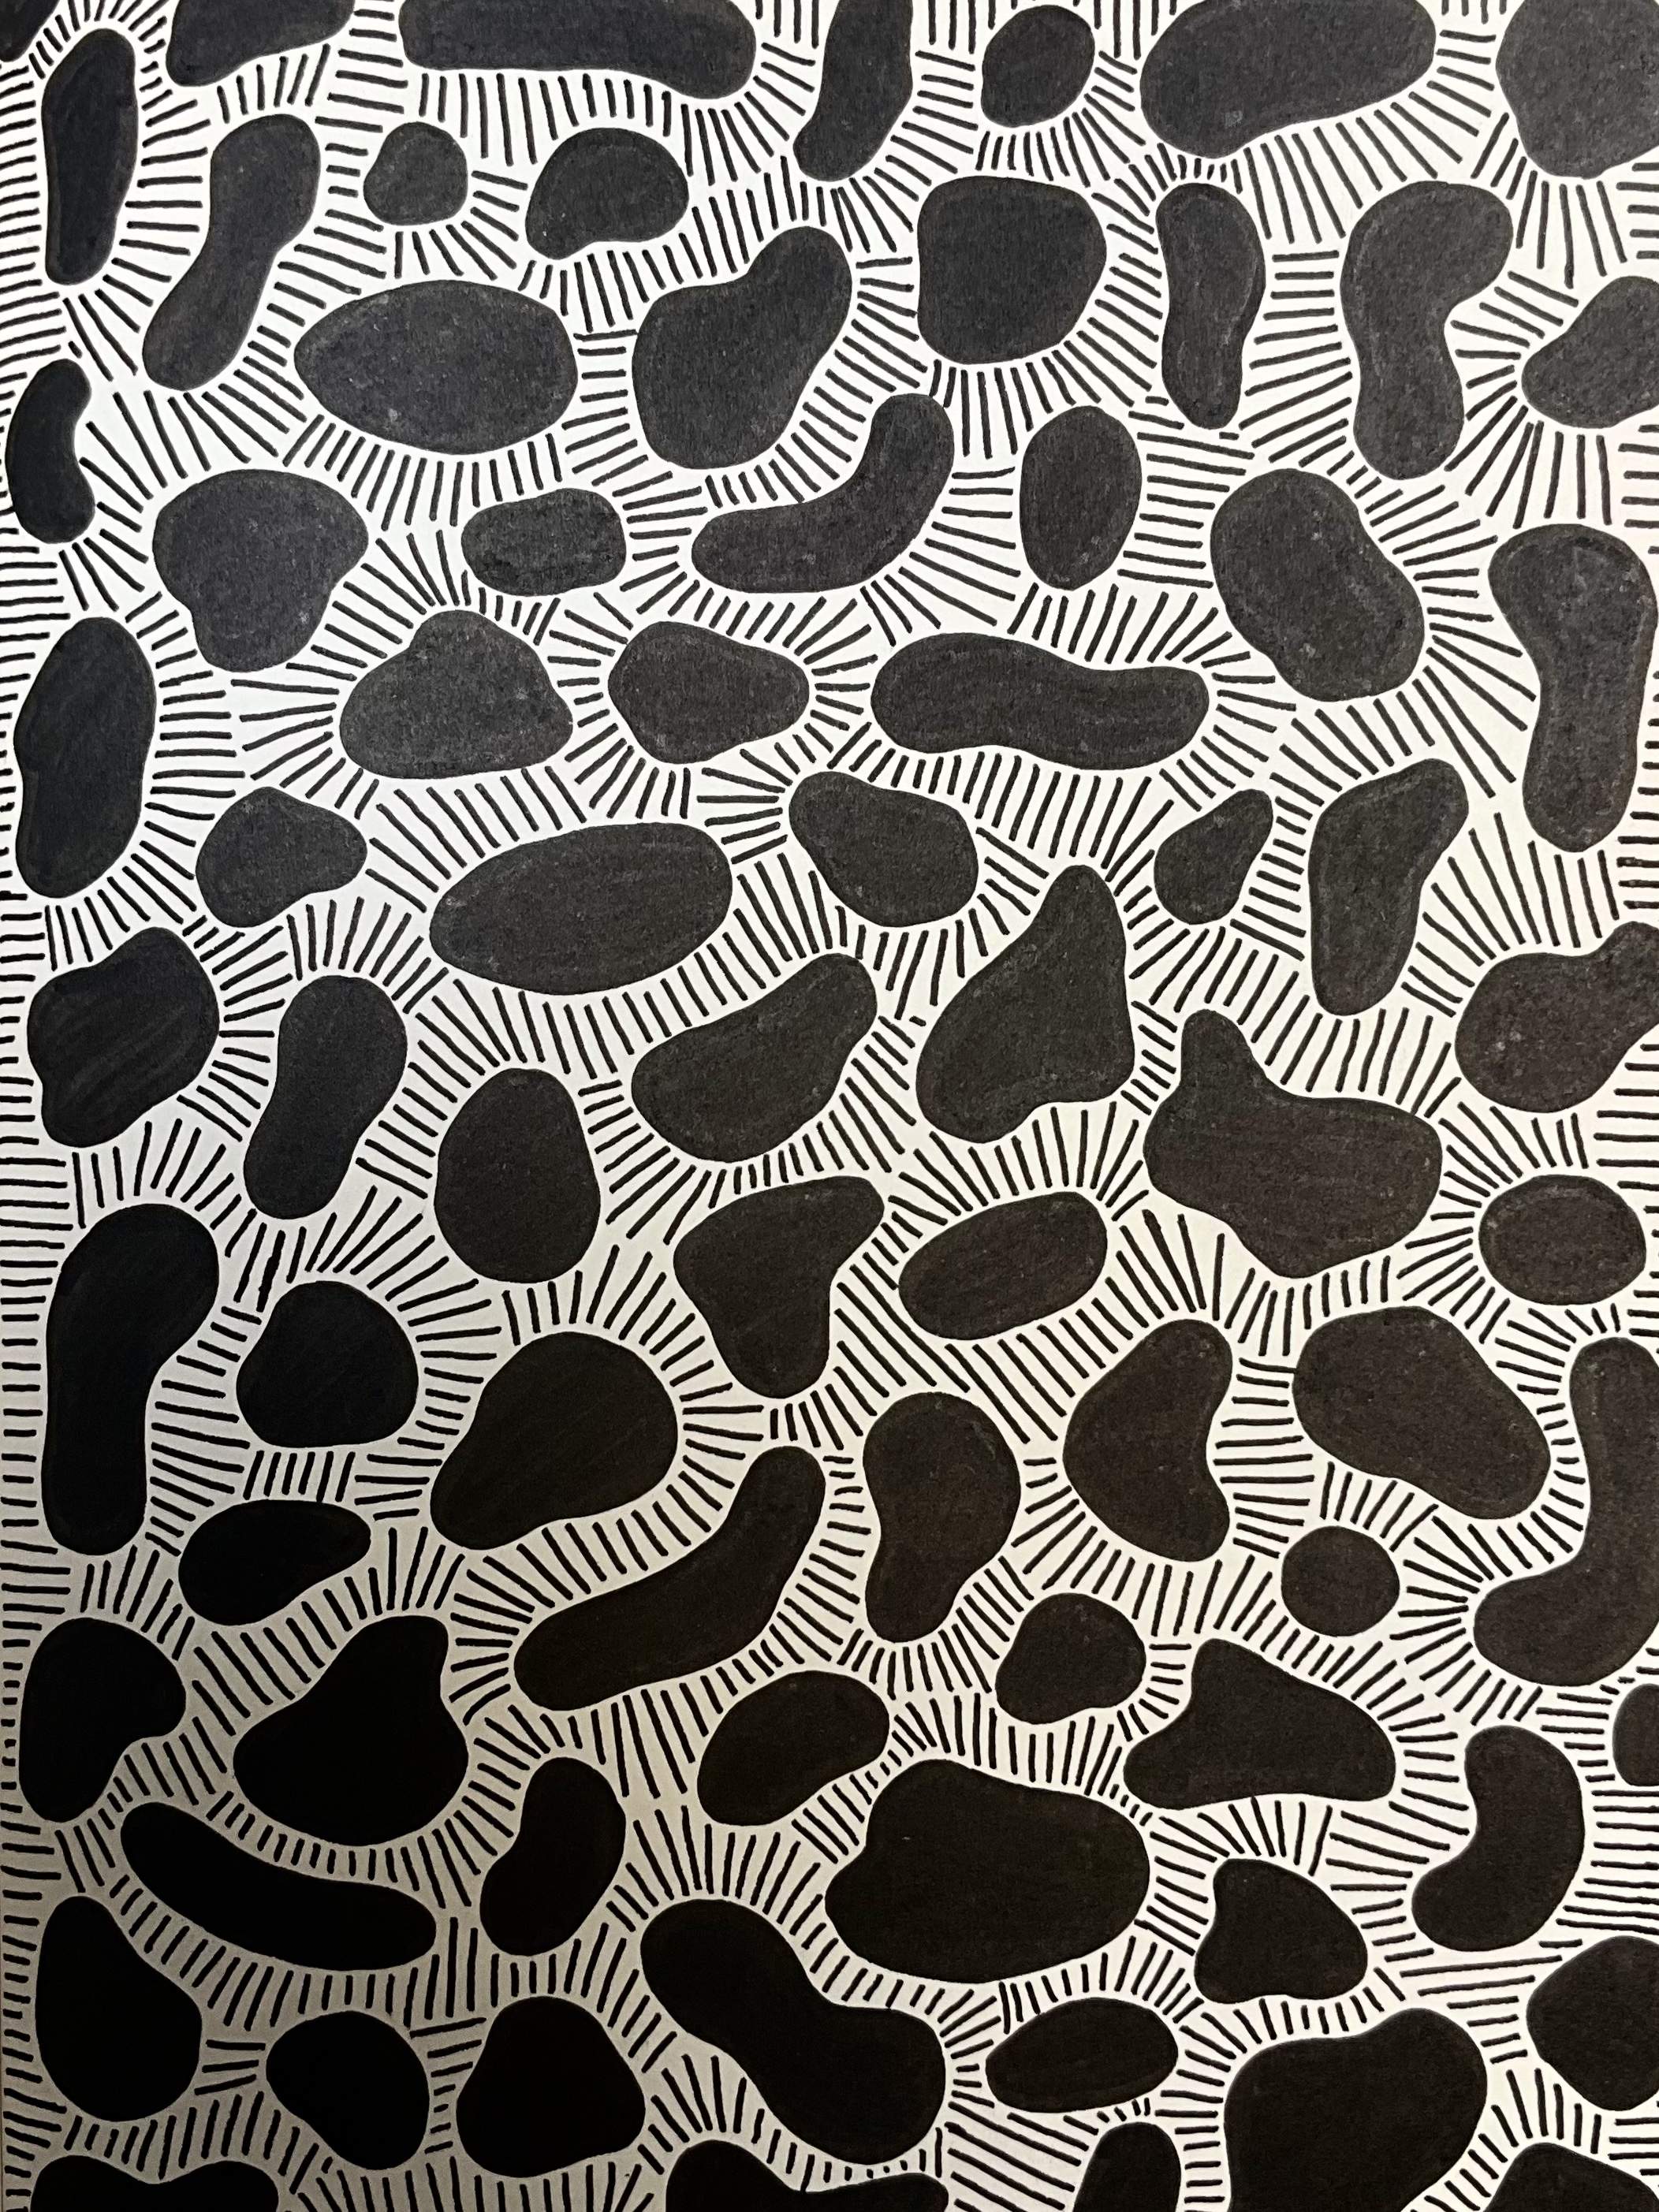 Pattern, black marker, 2021.